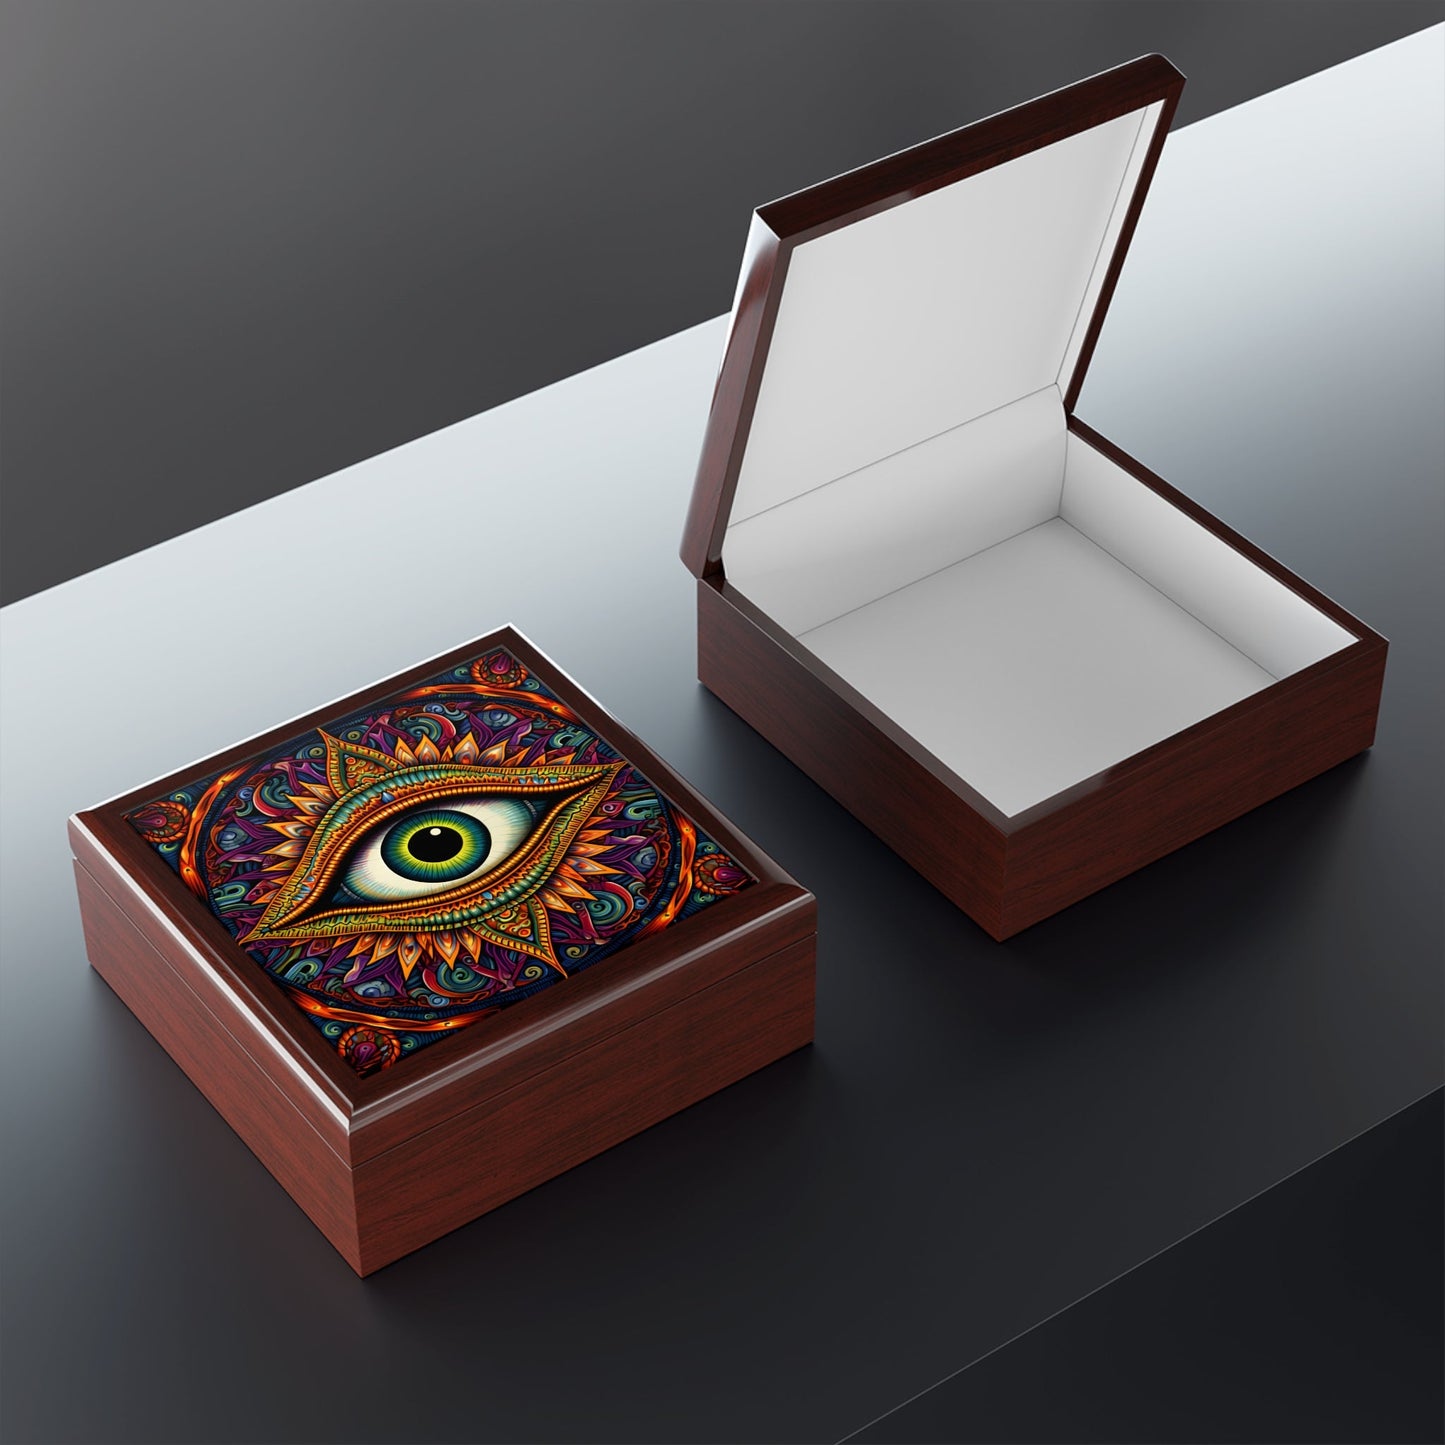 Eye of Horus Mandala Jewelry Box